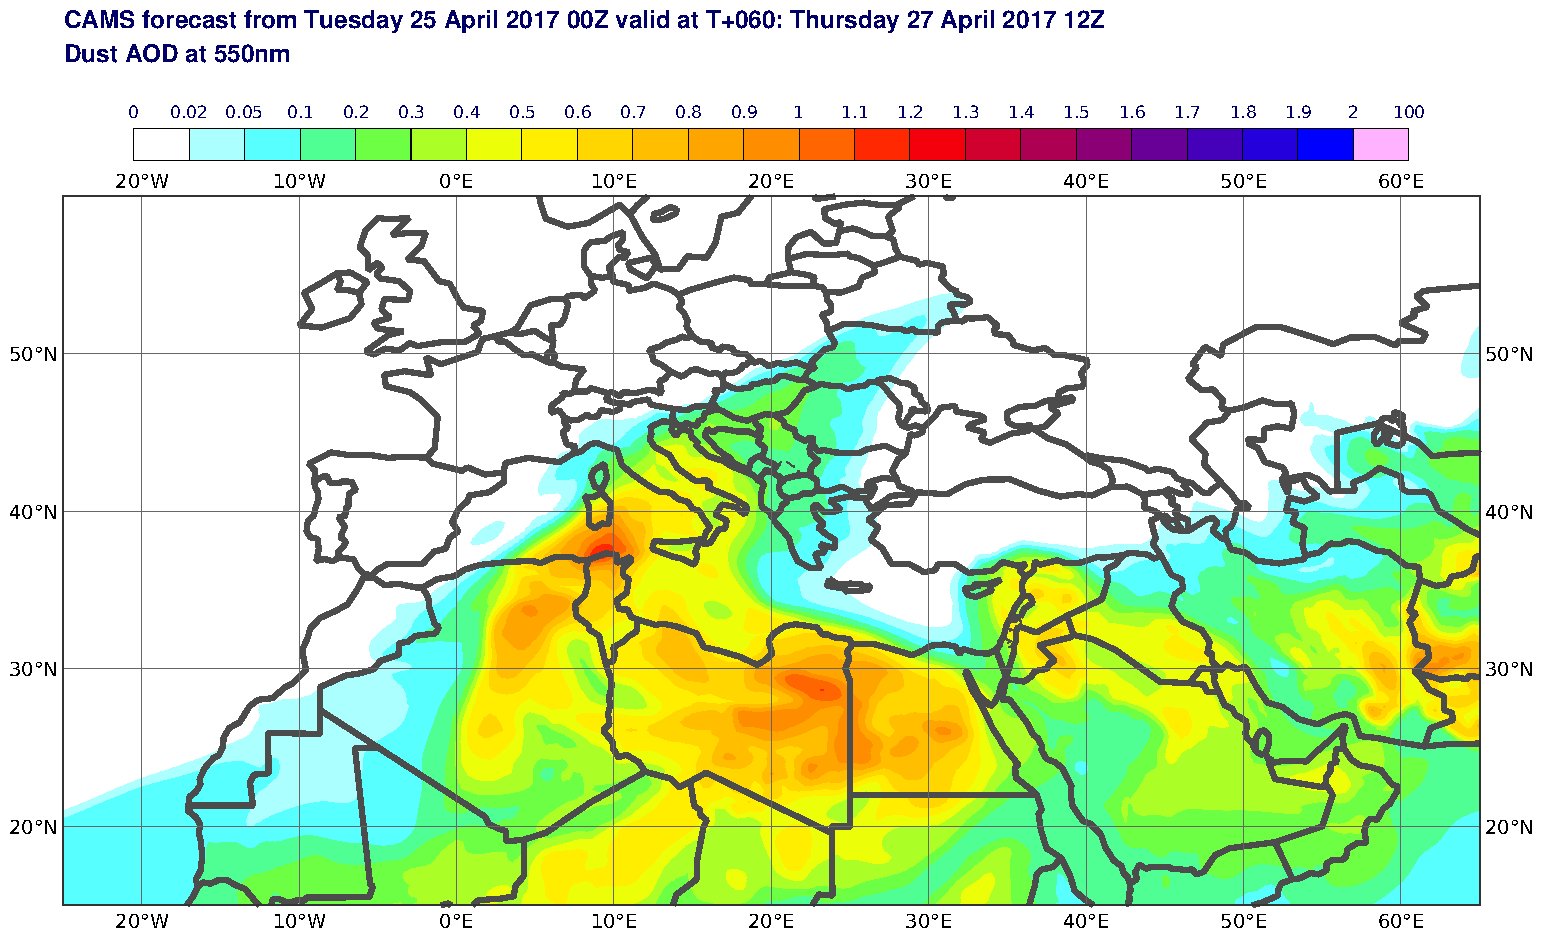 Dust AOD at 550nm valid at T60 - 2017-04-27 12:00